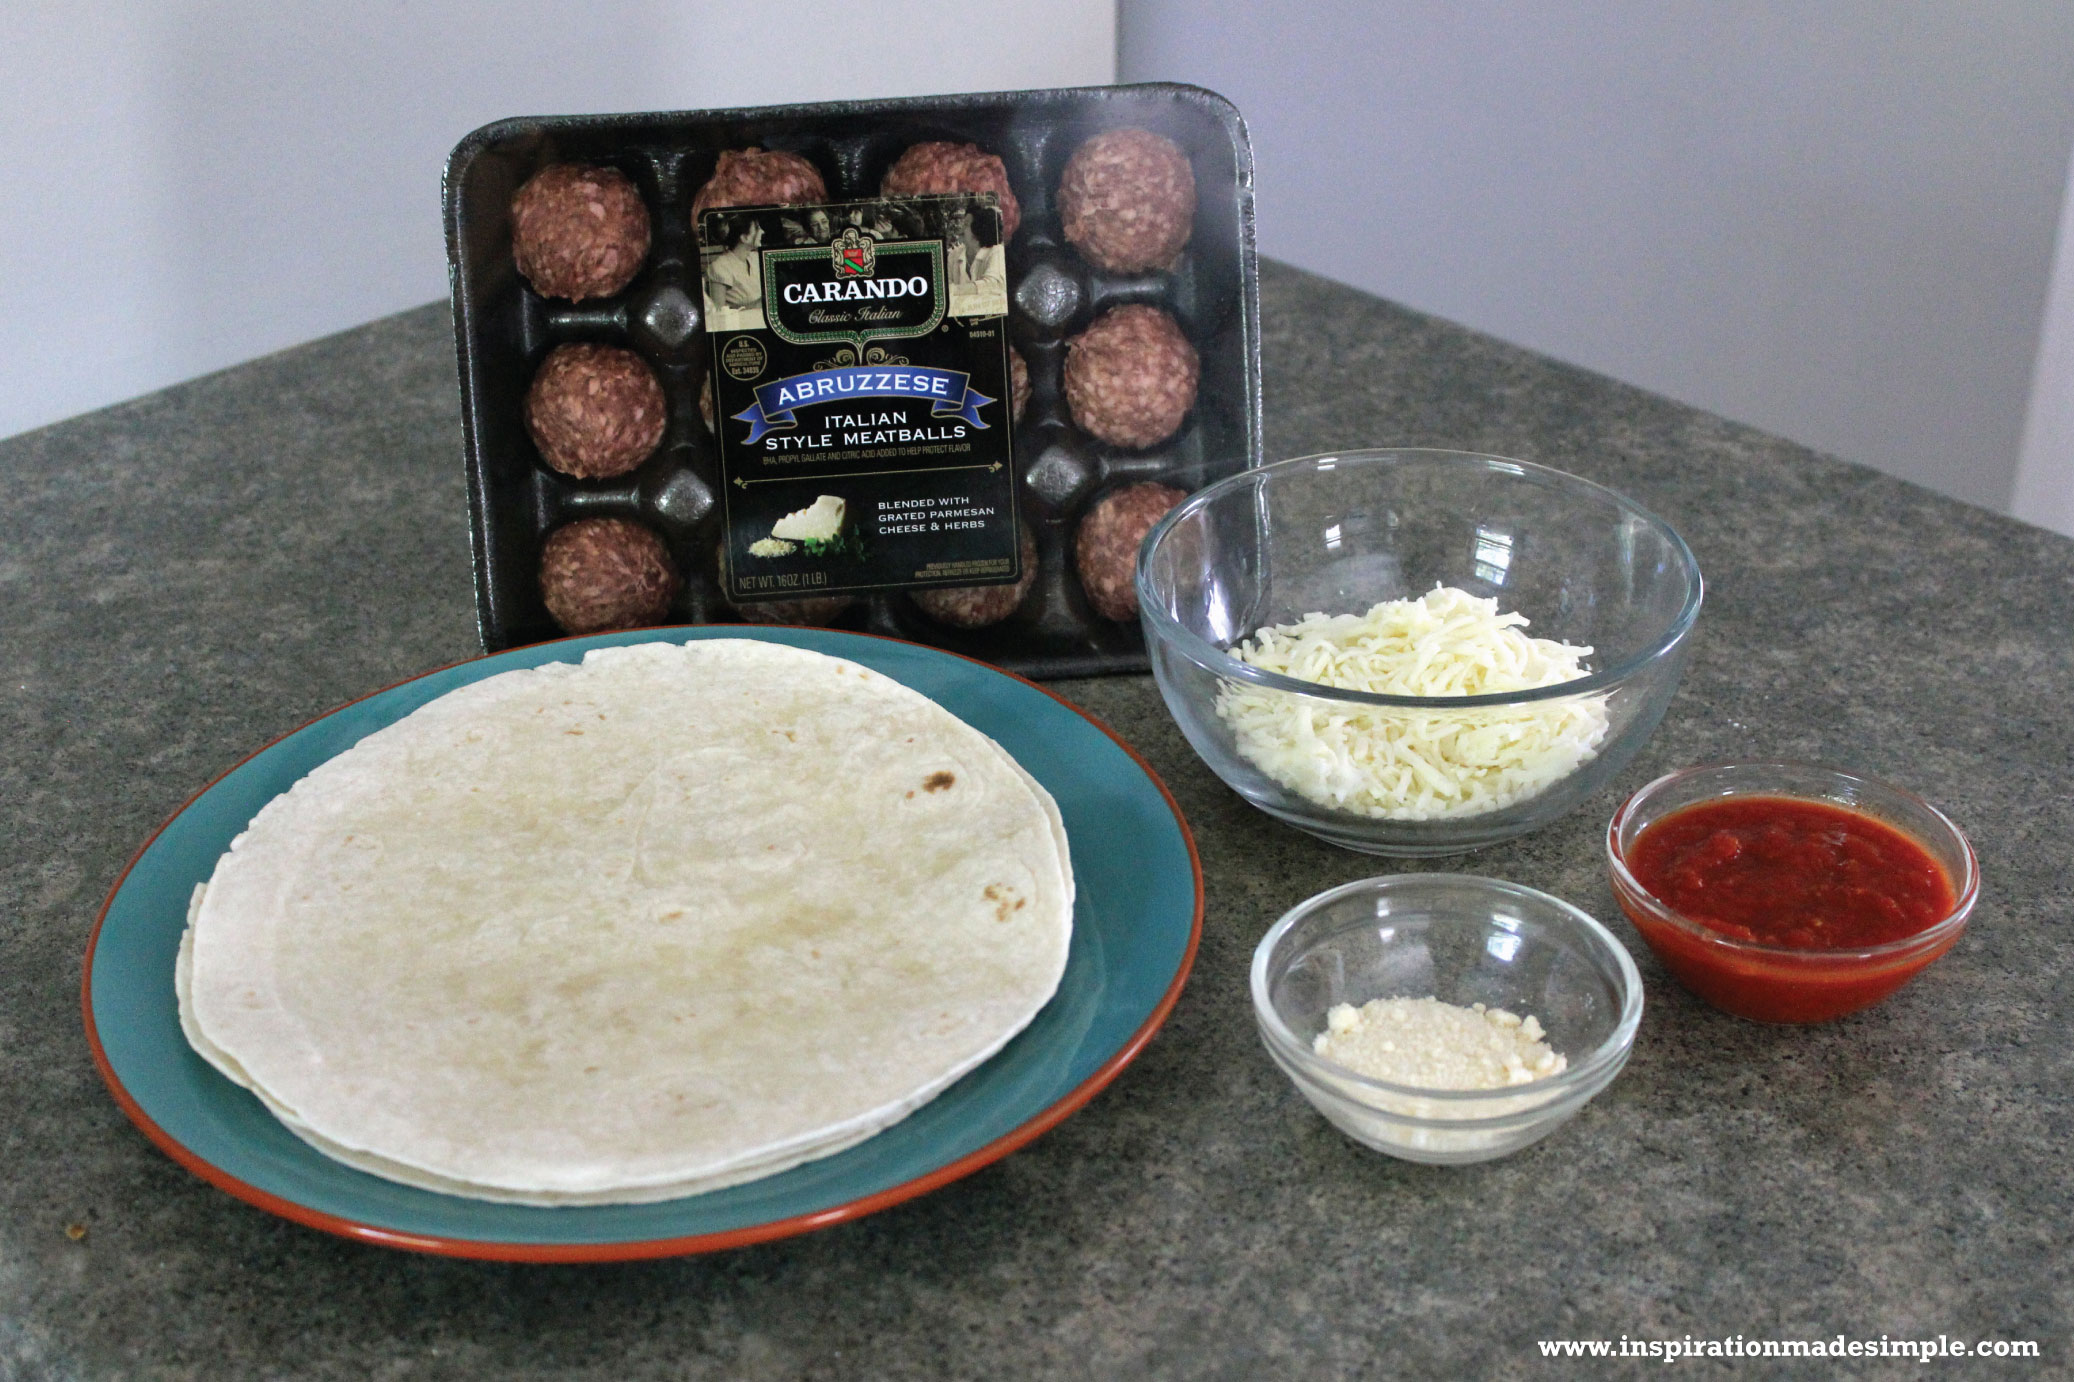 Parmesan Crusted Meatball Quesadillas with Carando Meatballs #MyCarandoMeal